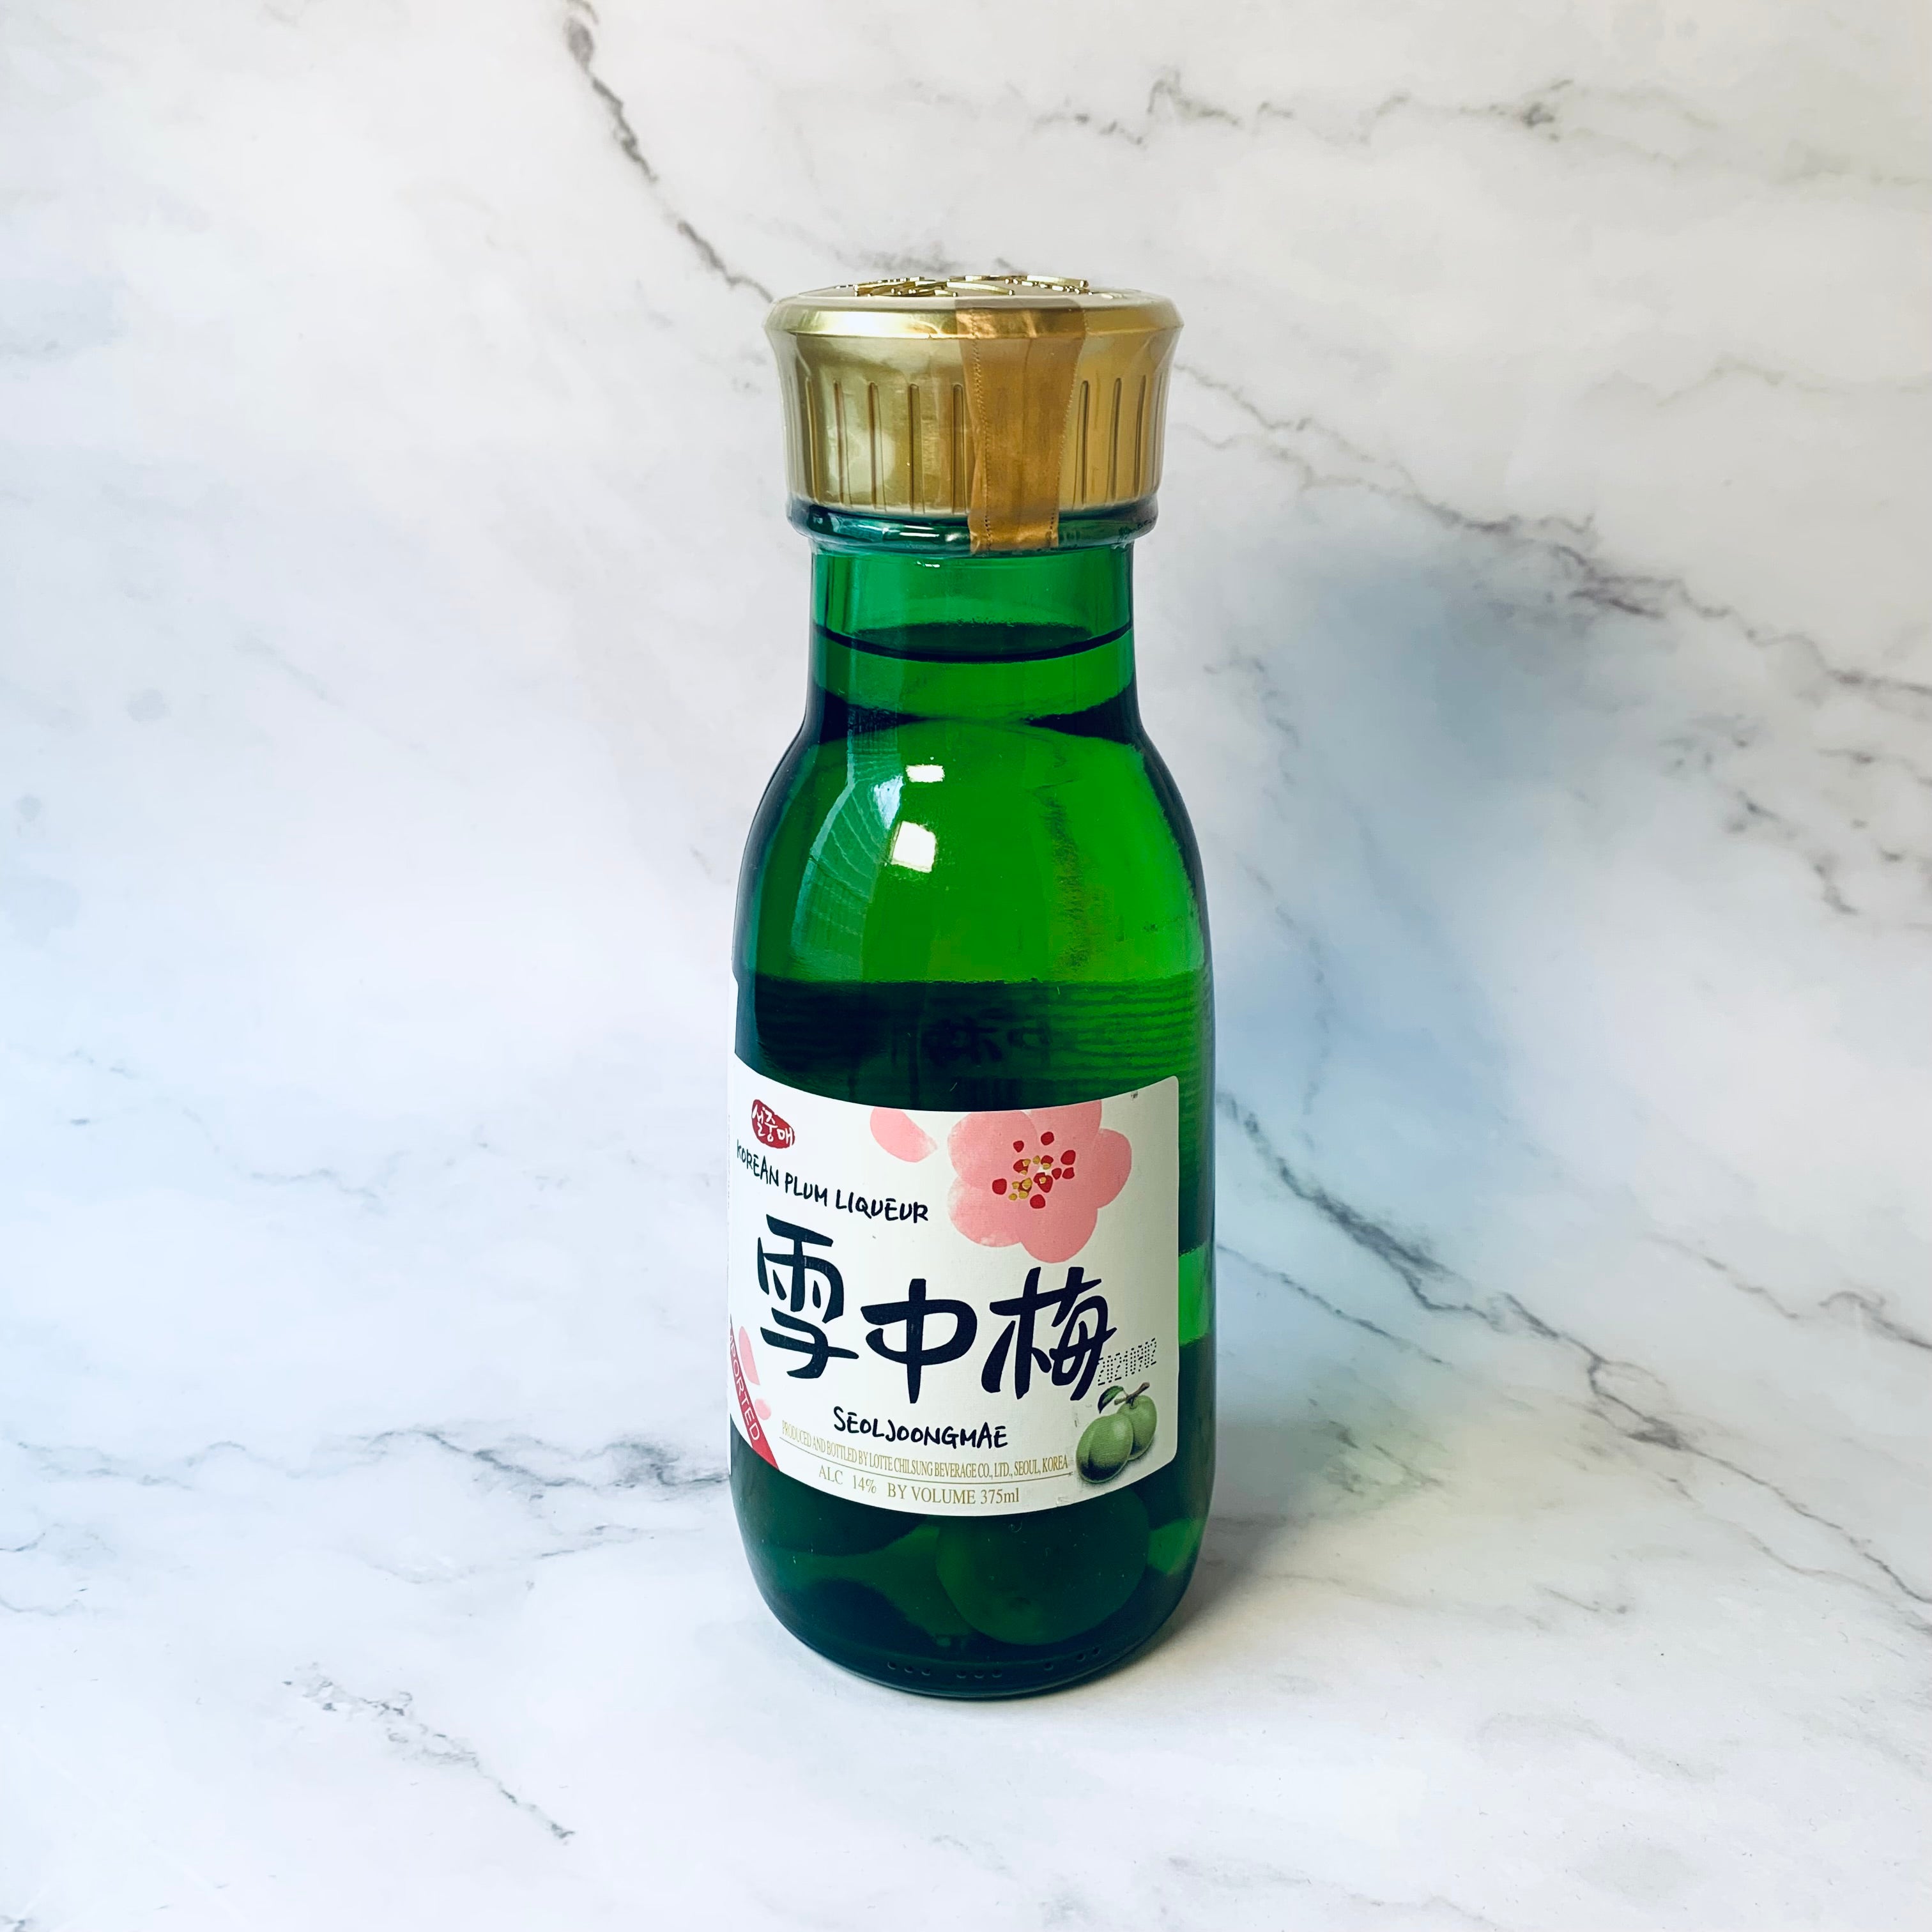 Korean Plum Wine Umeshu Seol Joong Mae 14% 375ml - Lotte